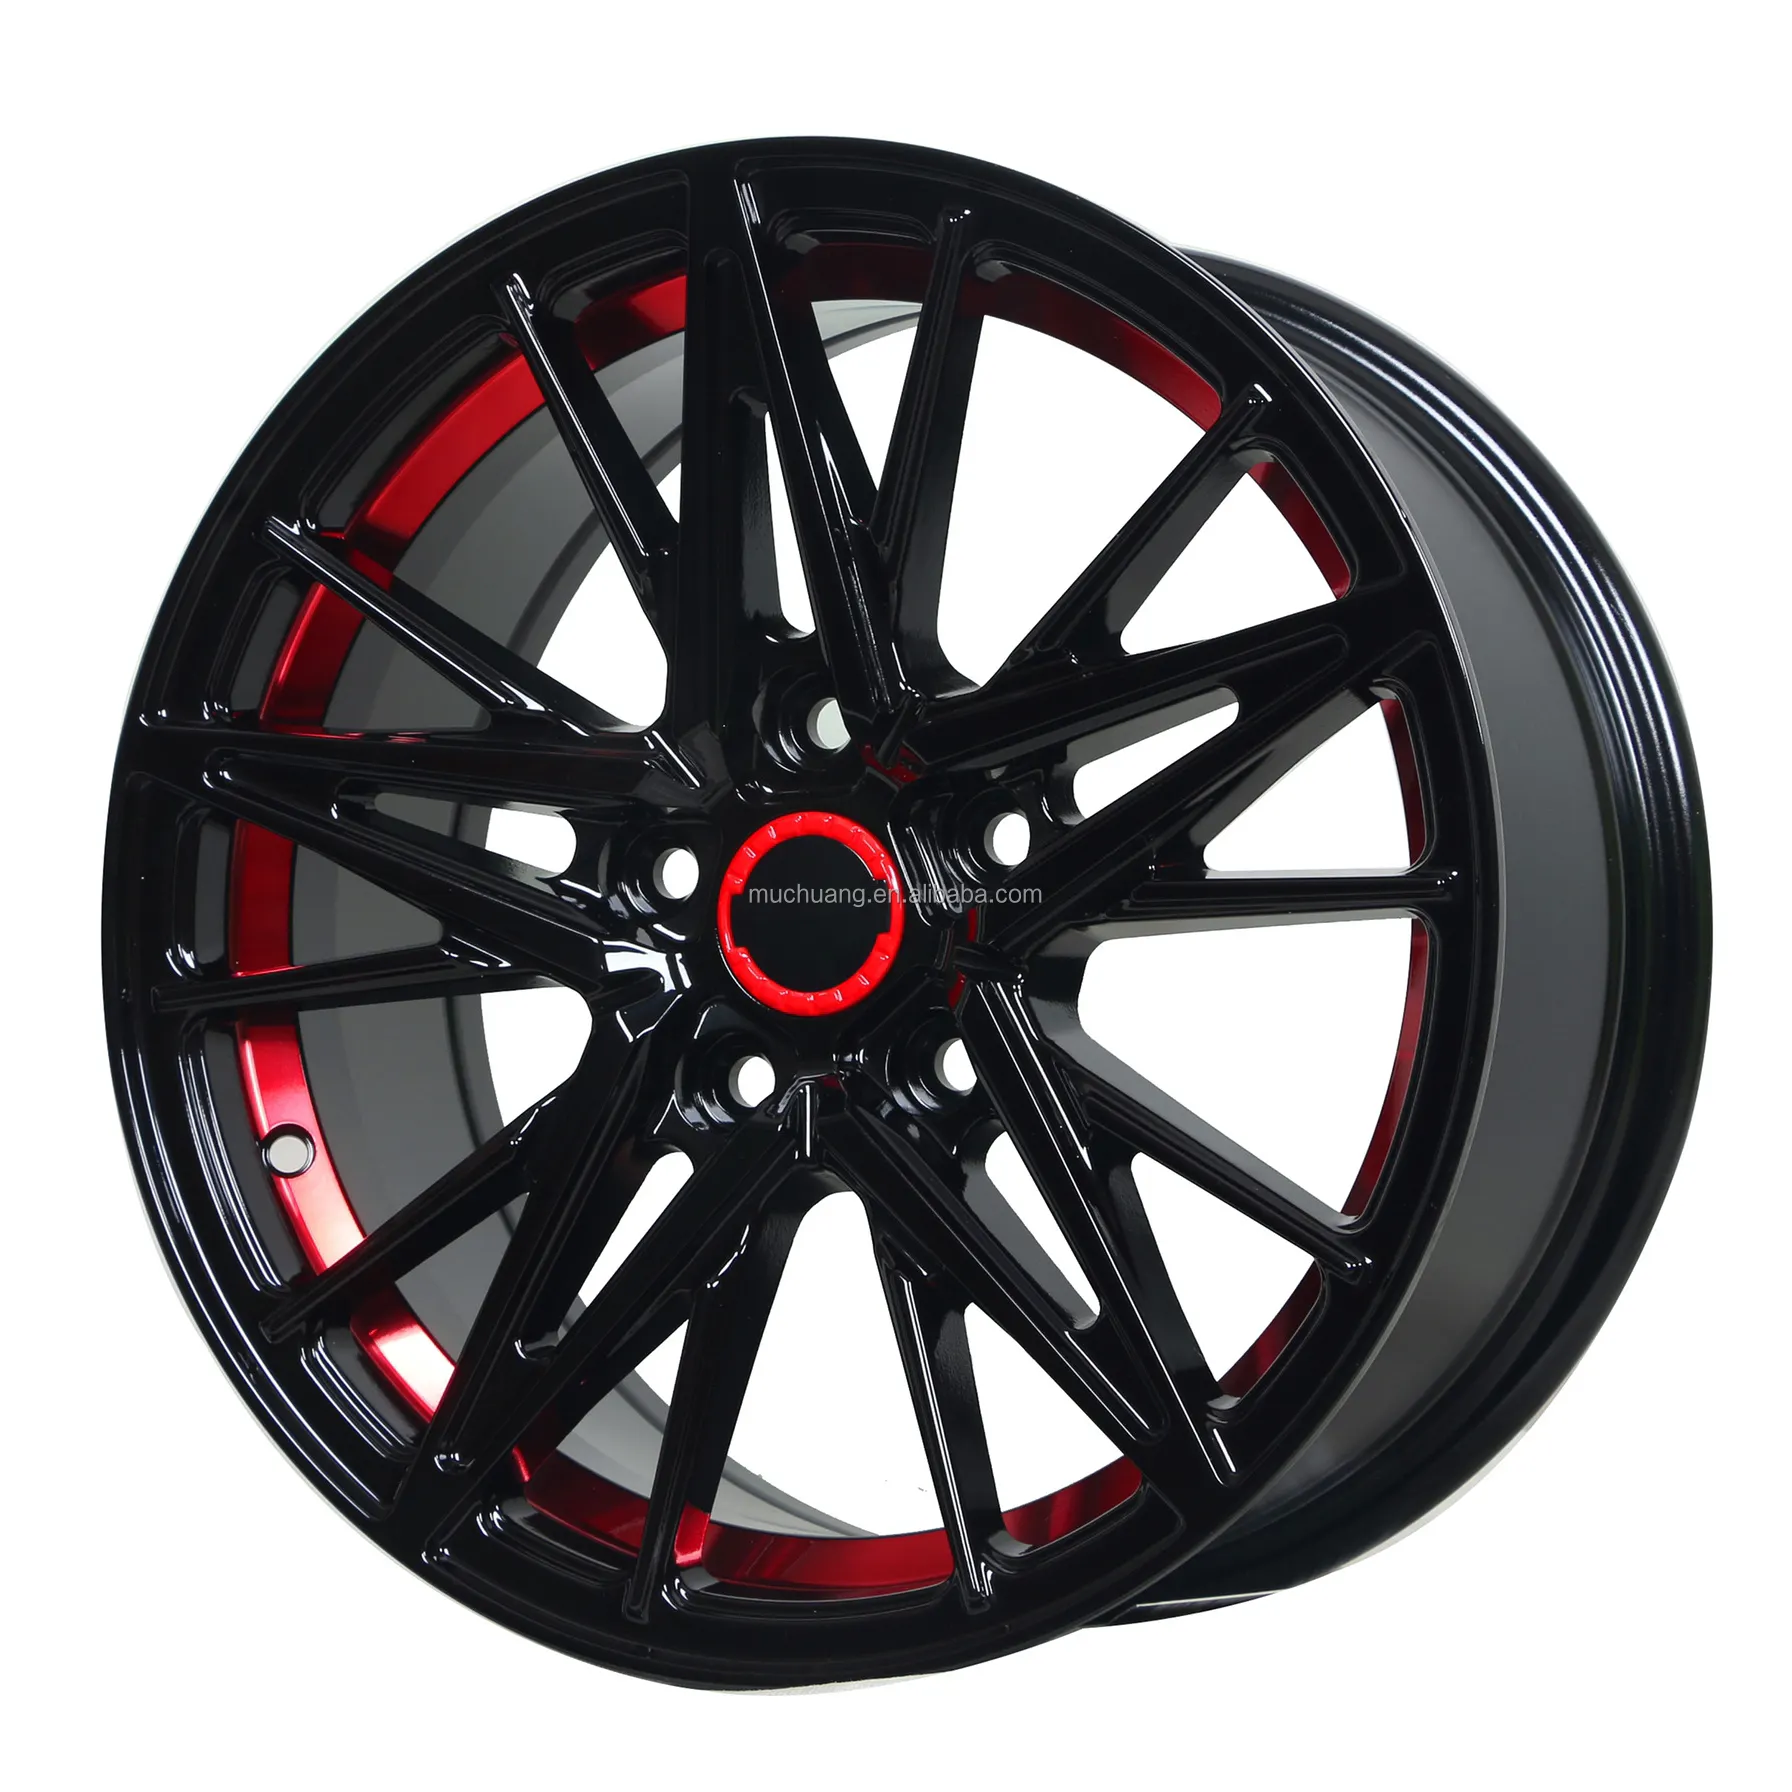 Car wheel rim is applicable to 14 15 16 inch Toyota Yaris Vios FS Honda Civic fit Nissan sentra Hyundai Verna modified wheel hub